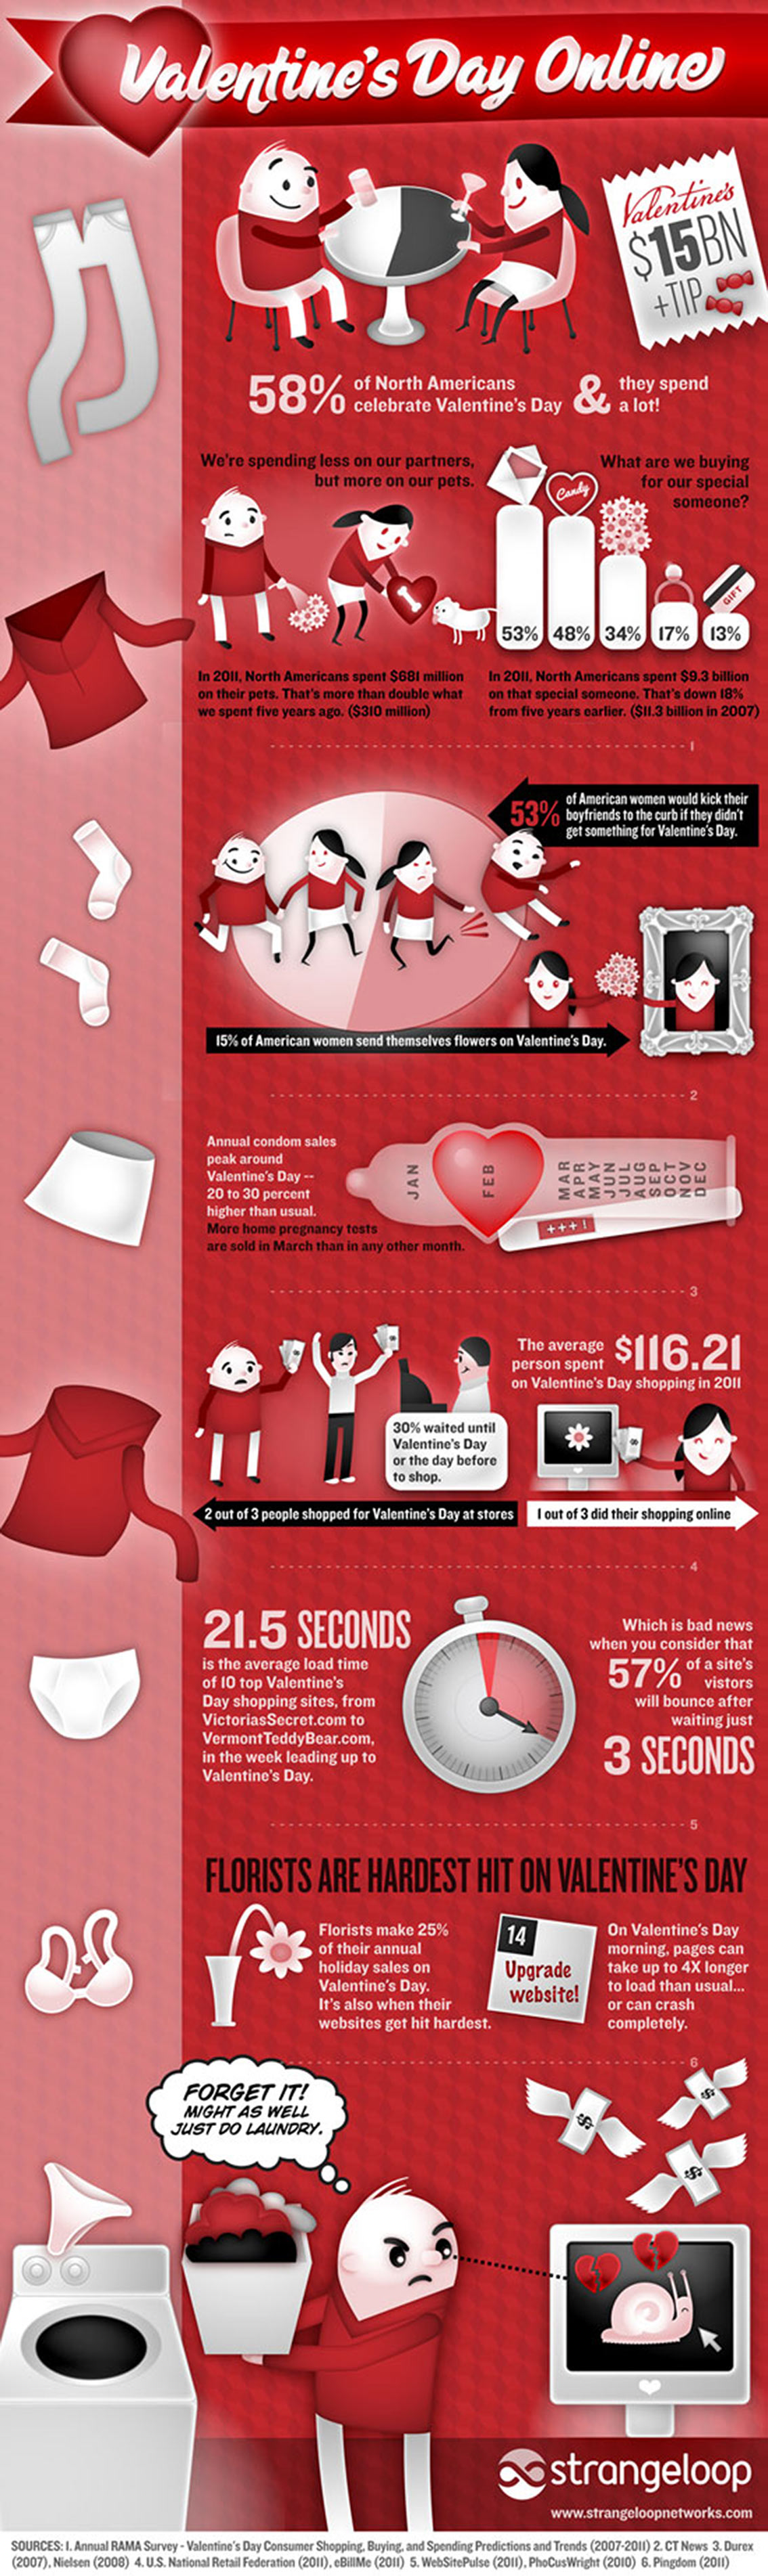 Valentines Day Online Infographic